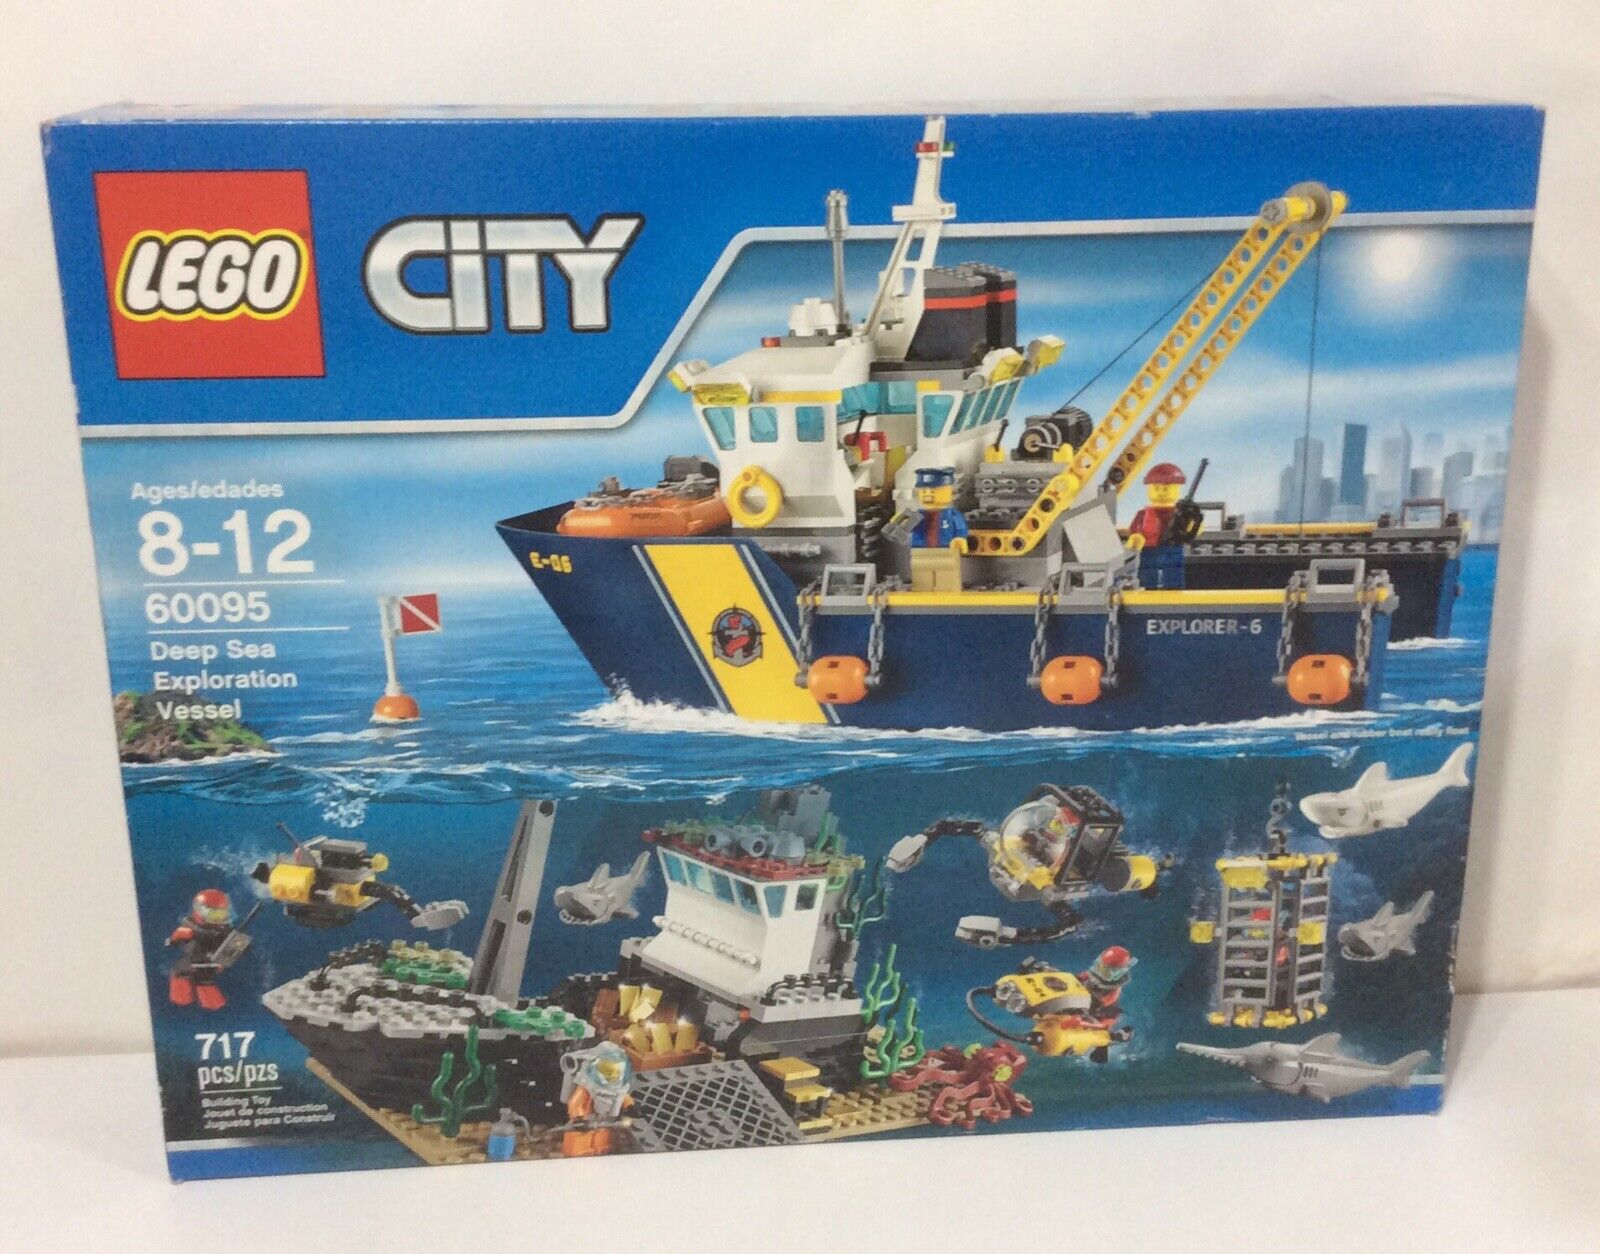 LEGO CITY 60095 Deep Sea Exploration Vessel, Retired Set, New in Sealed Box